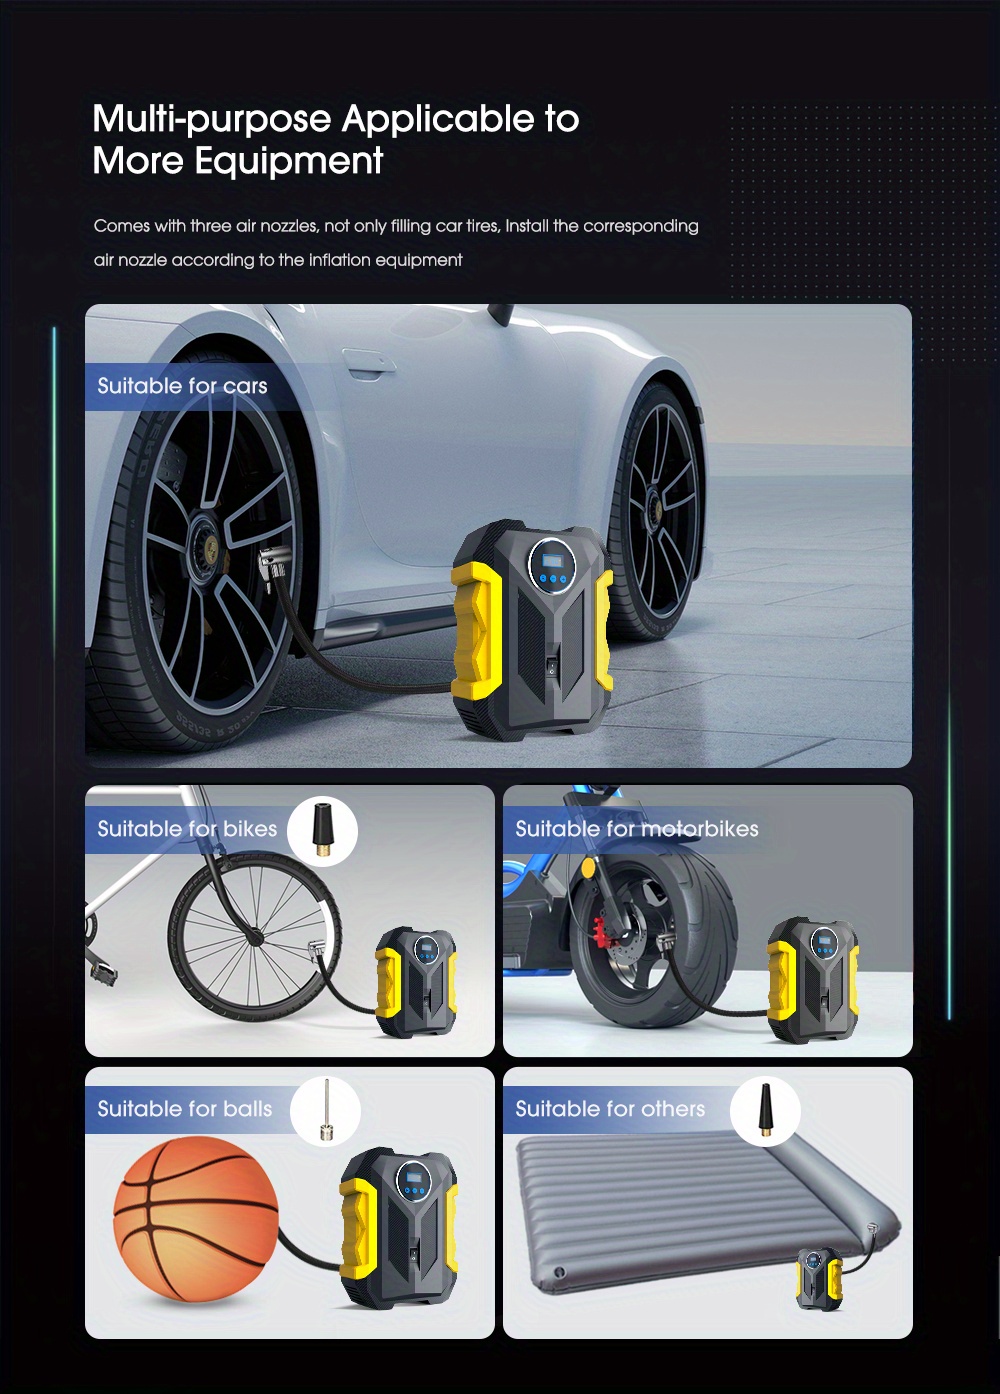 CARSUN Portable Automobile Air Compressor Digital Tire Inflation